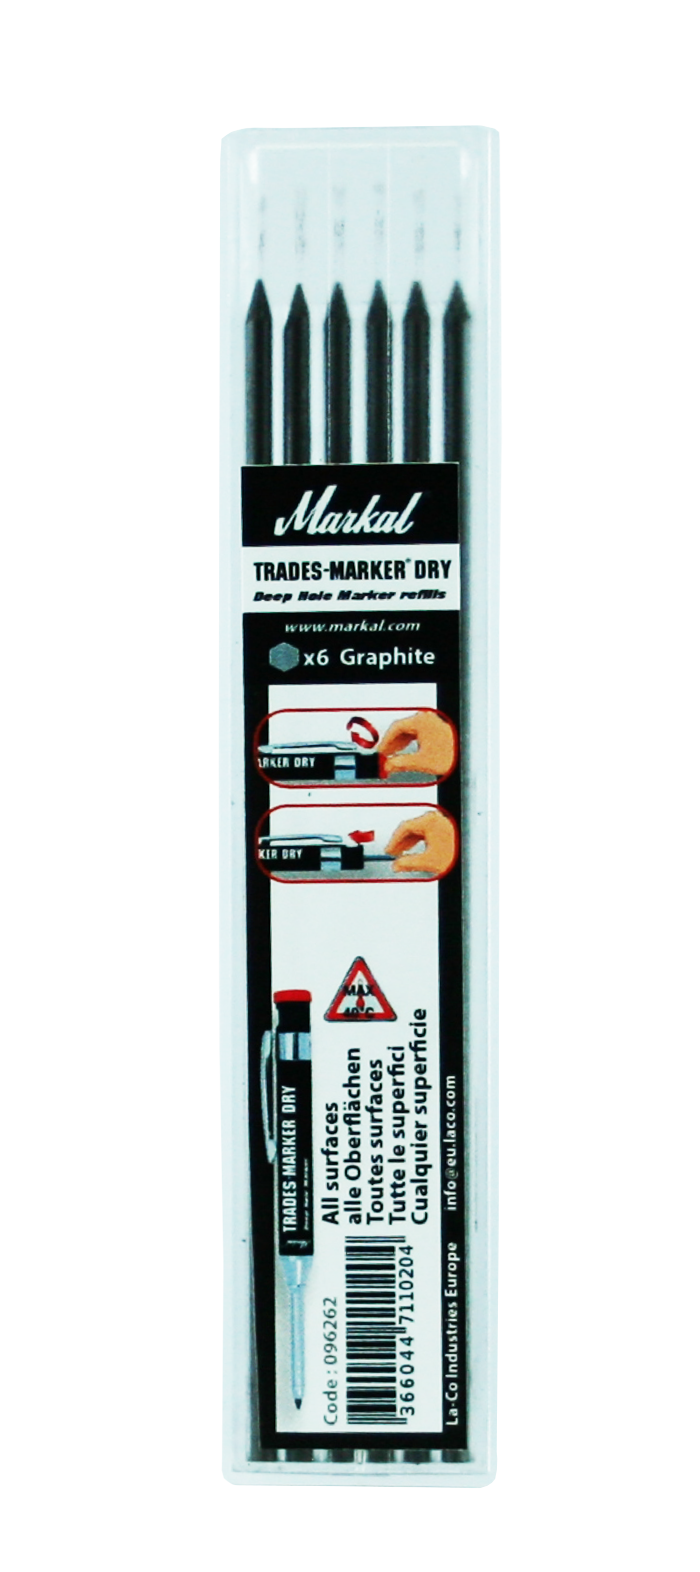 Buy Markal 96107, Silver-Streak Round Metal Marker with 6 Refills